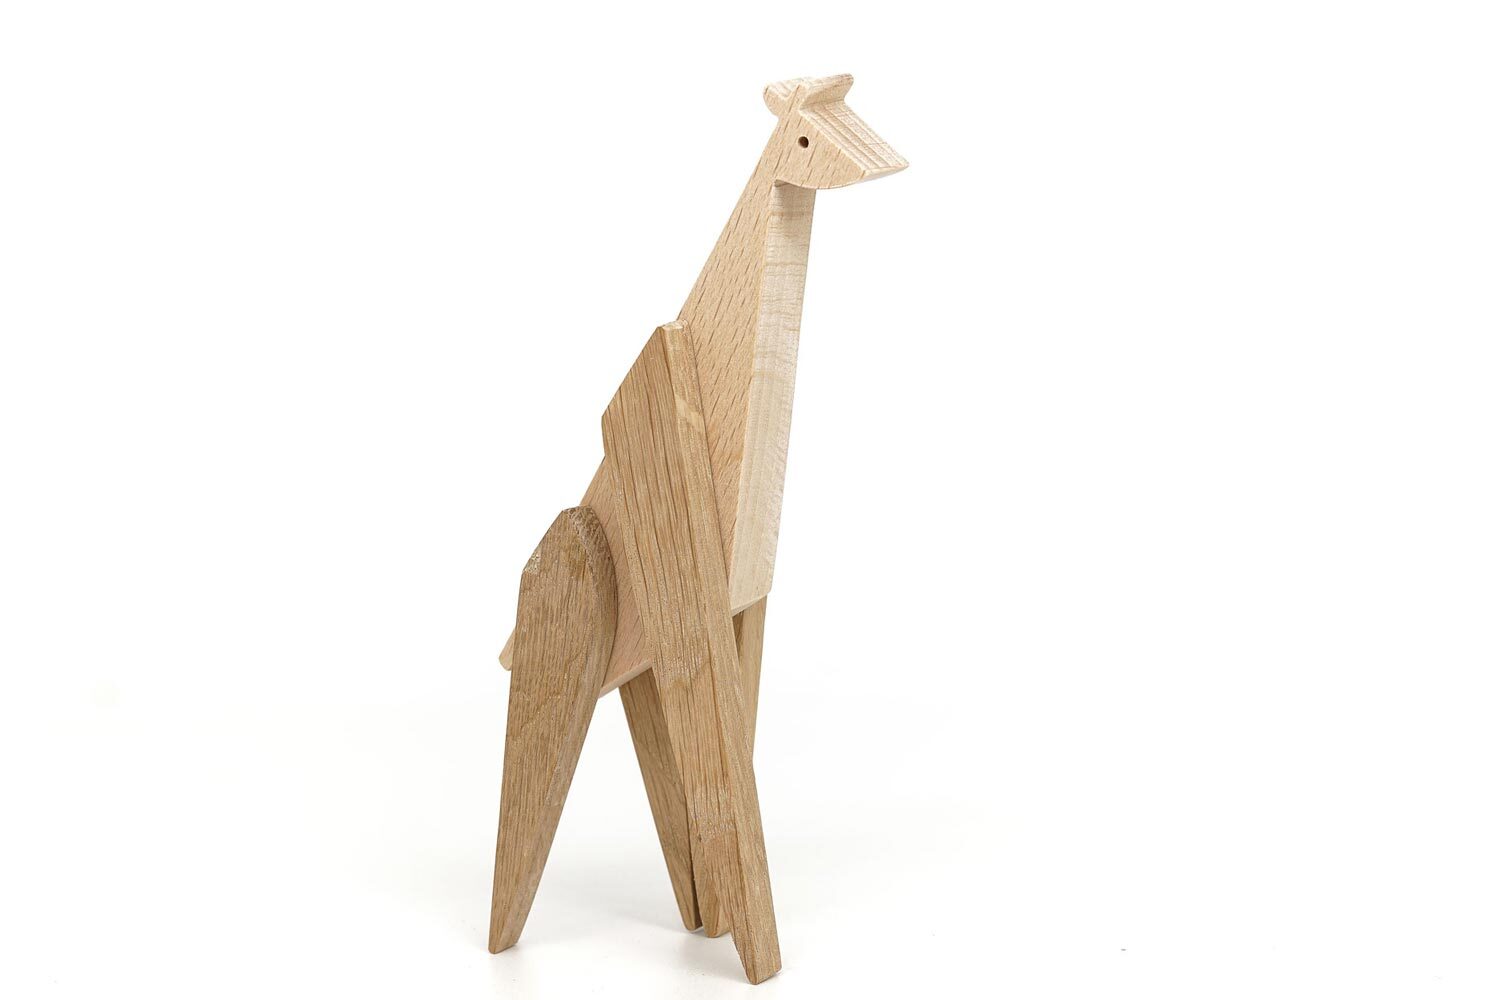 Toerist Senator Articulatie giraffe is a handmade wooden magnetic toy for kids and adults | designboom  shop